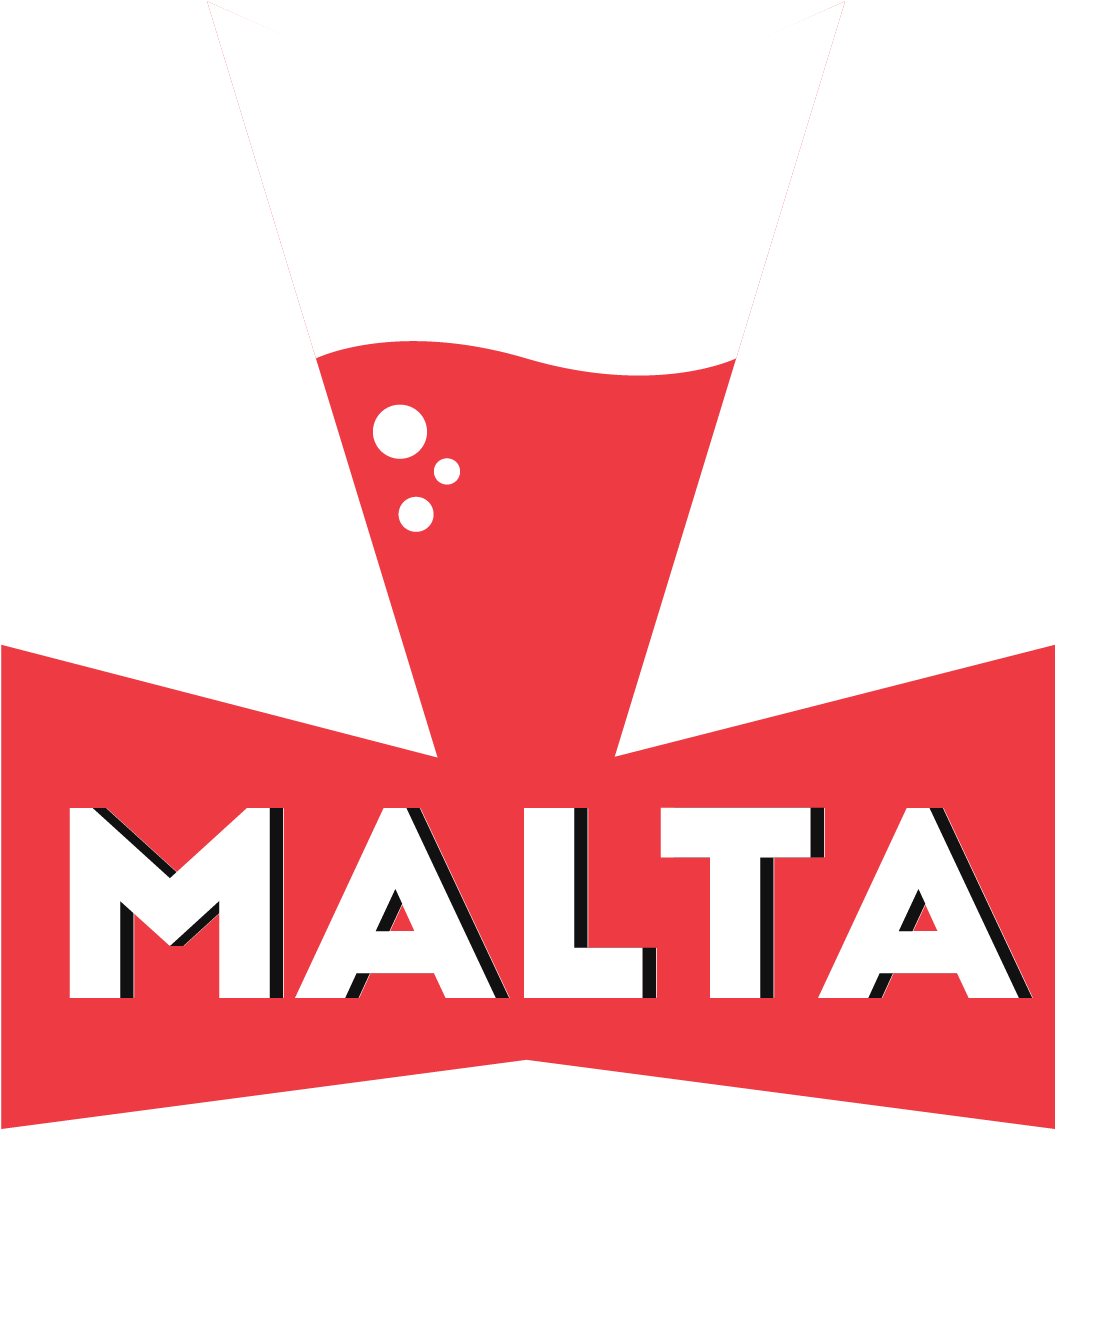 Malta Pub Crawl Footer Logo - City Of Plano (1340x1610)